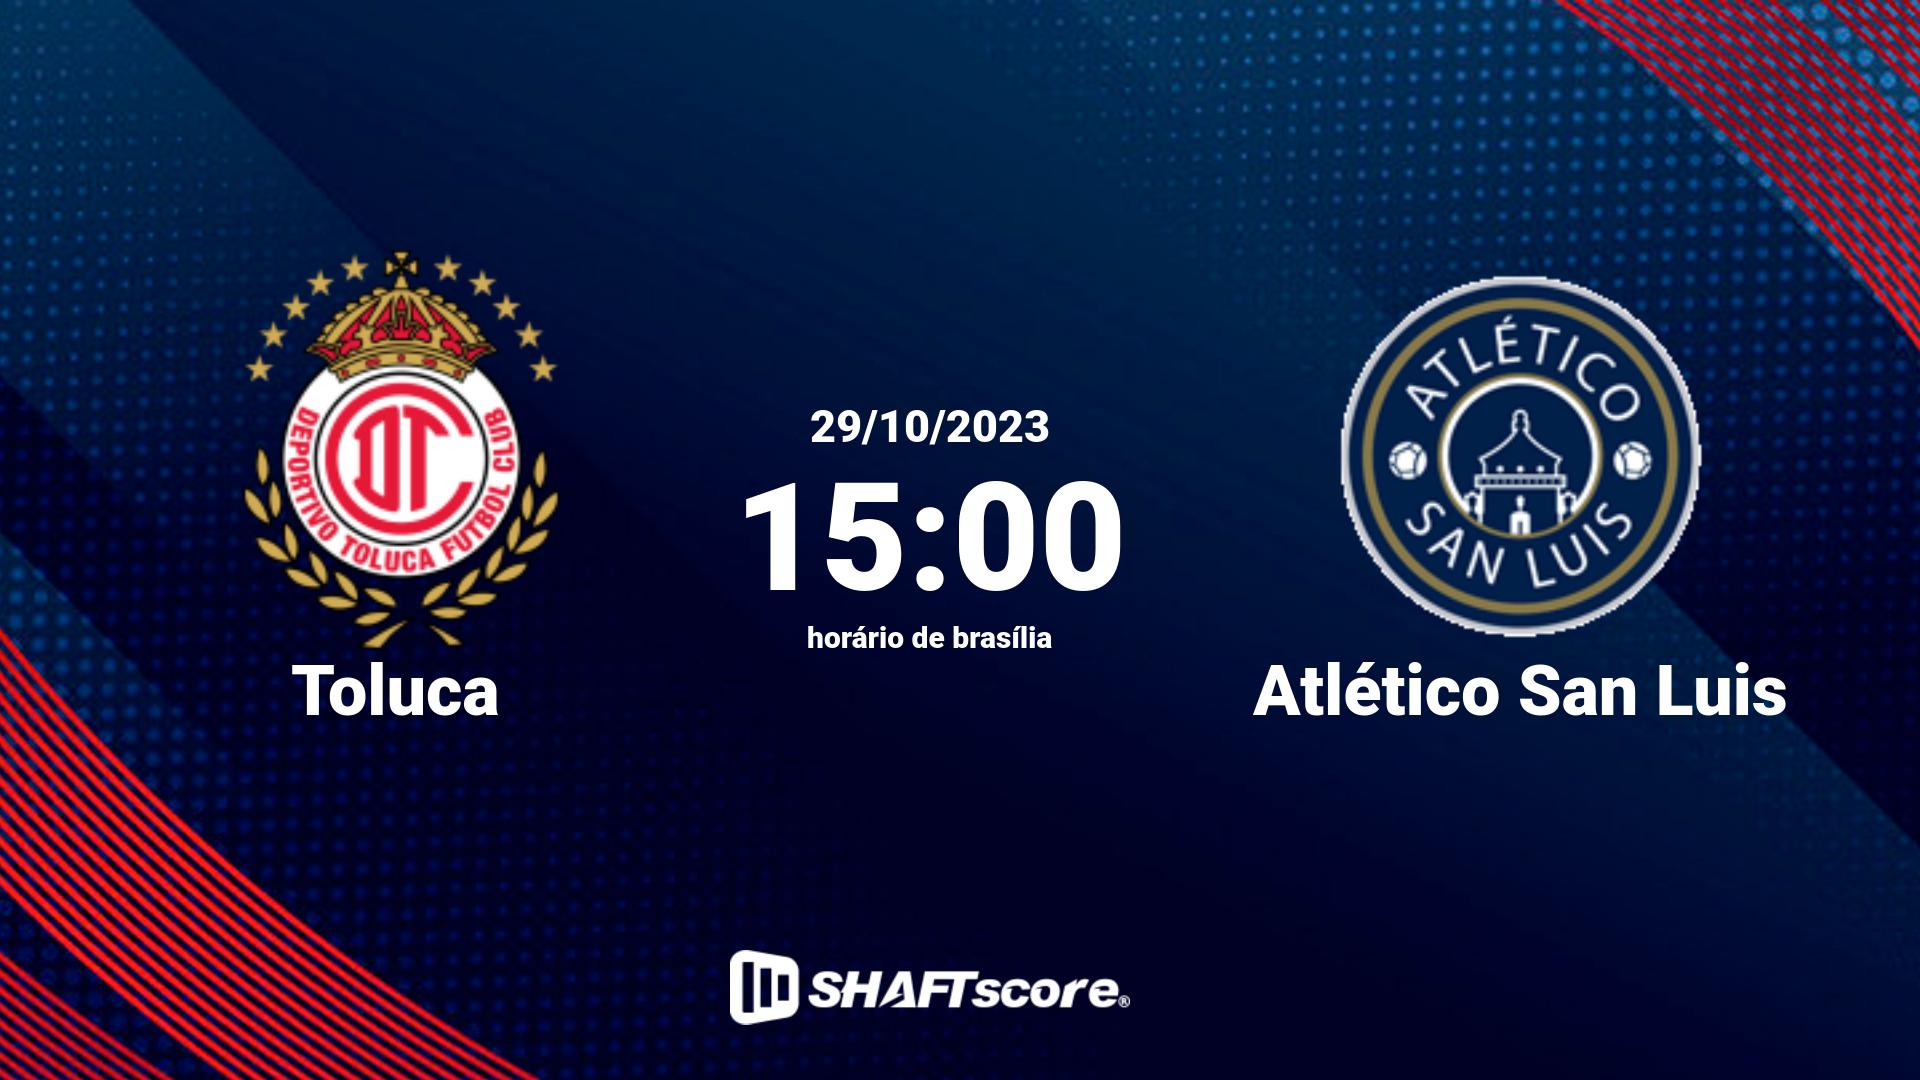 Estatísticas do jogo Toluca vs Atlético San Luis 29.10 15:00